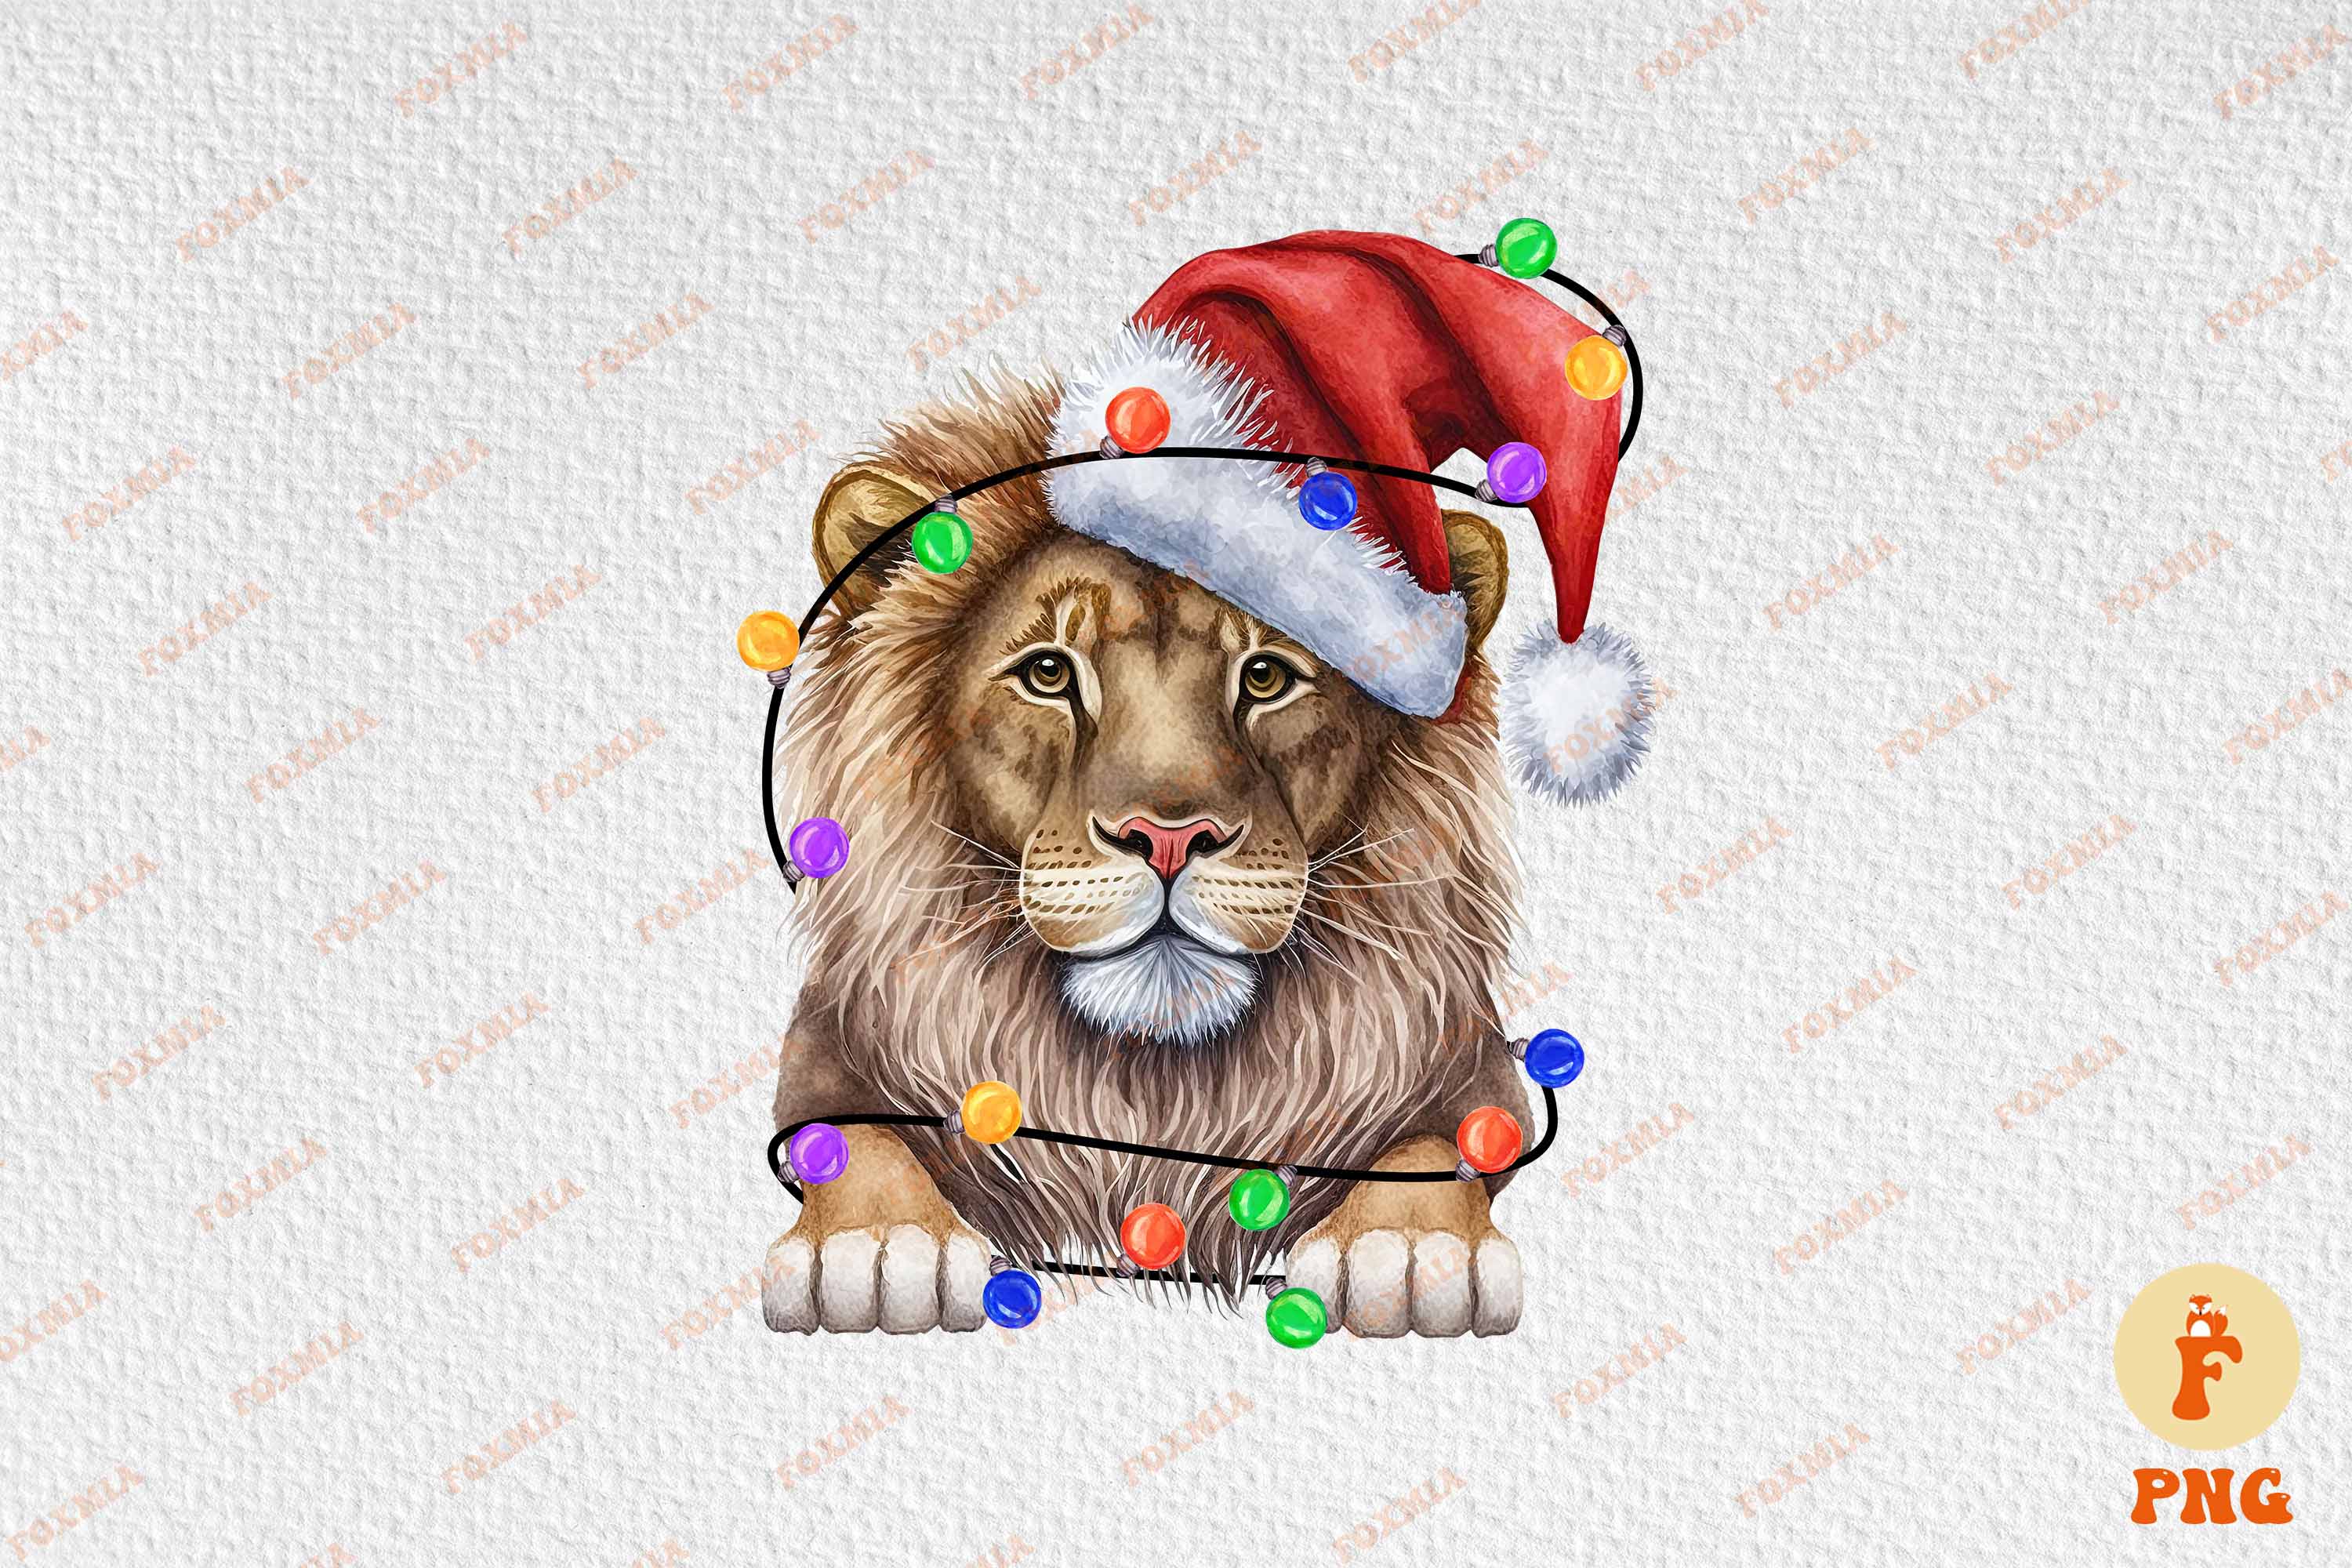 Beautiful image of a lion wearing a santa hat.